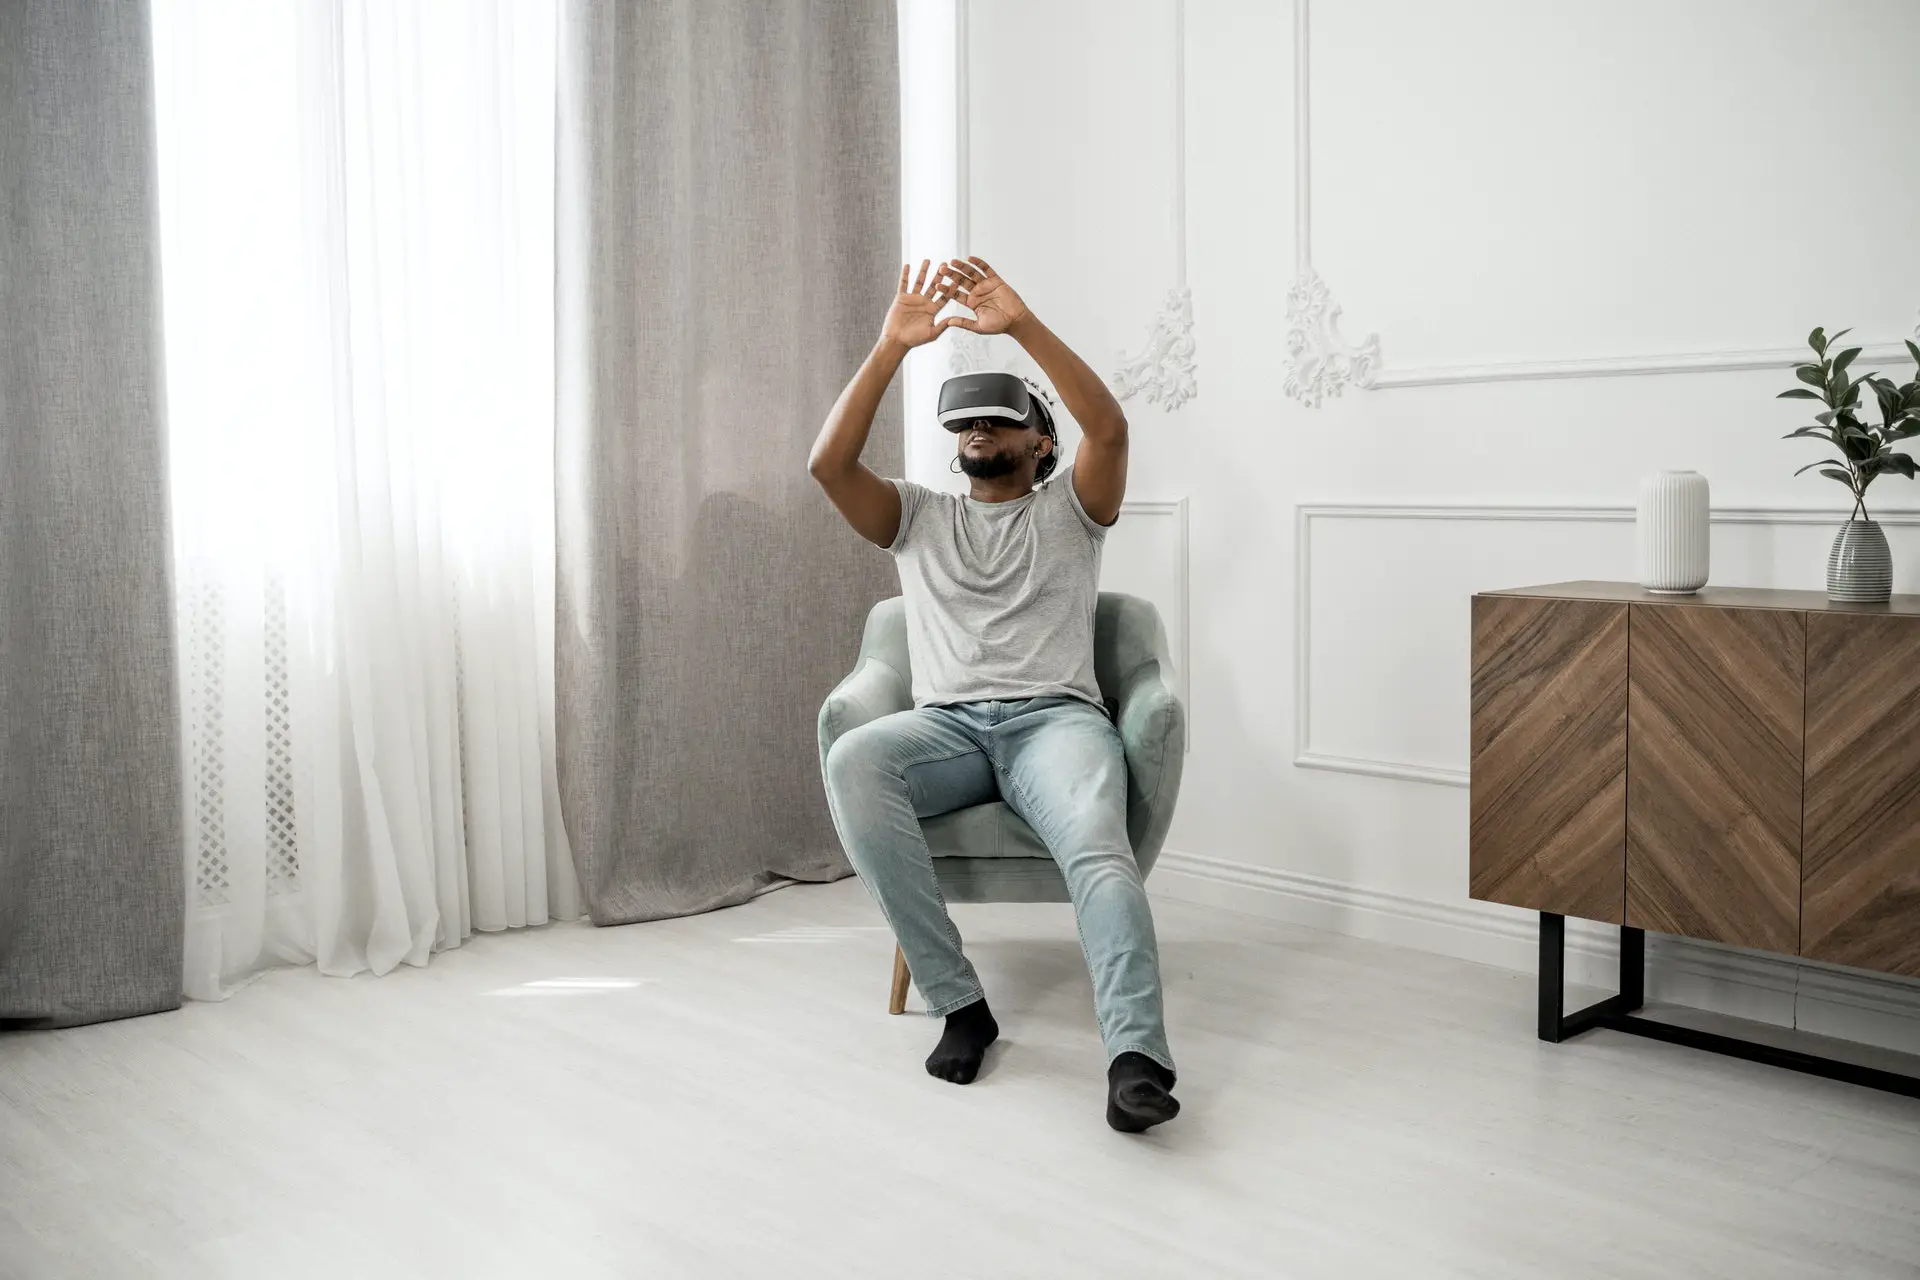 Miami-based YUPIX Uses VR to Facilitate Innovative Real Estate Experiences